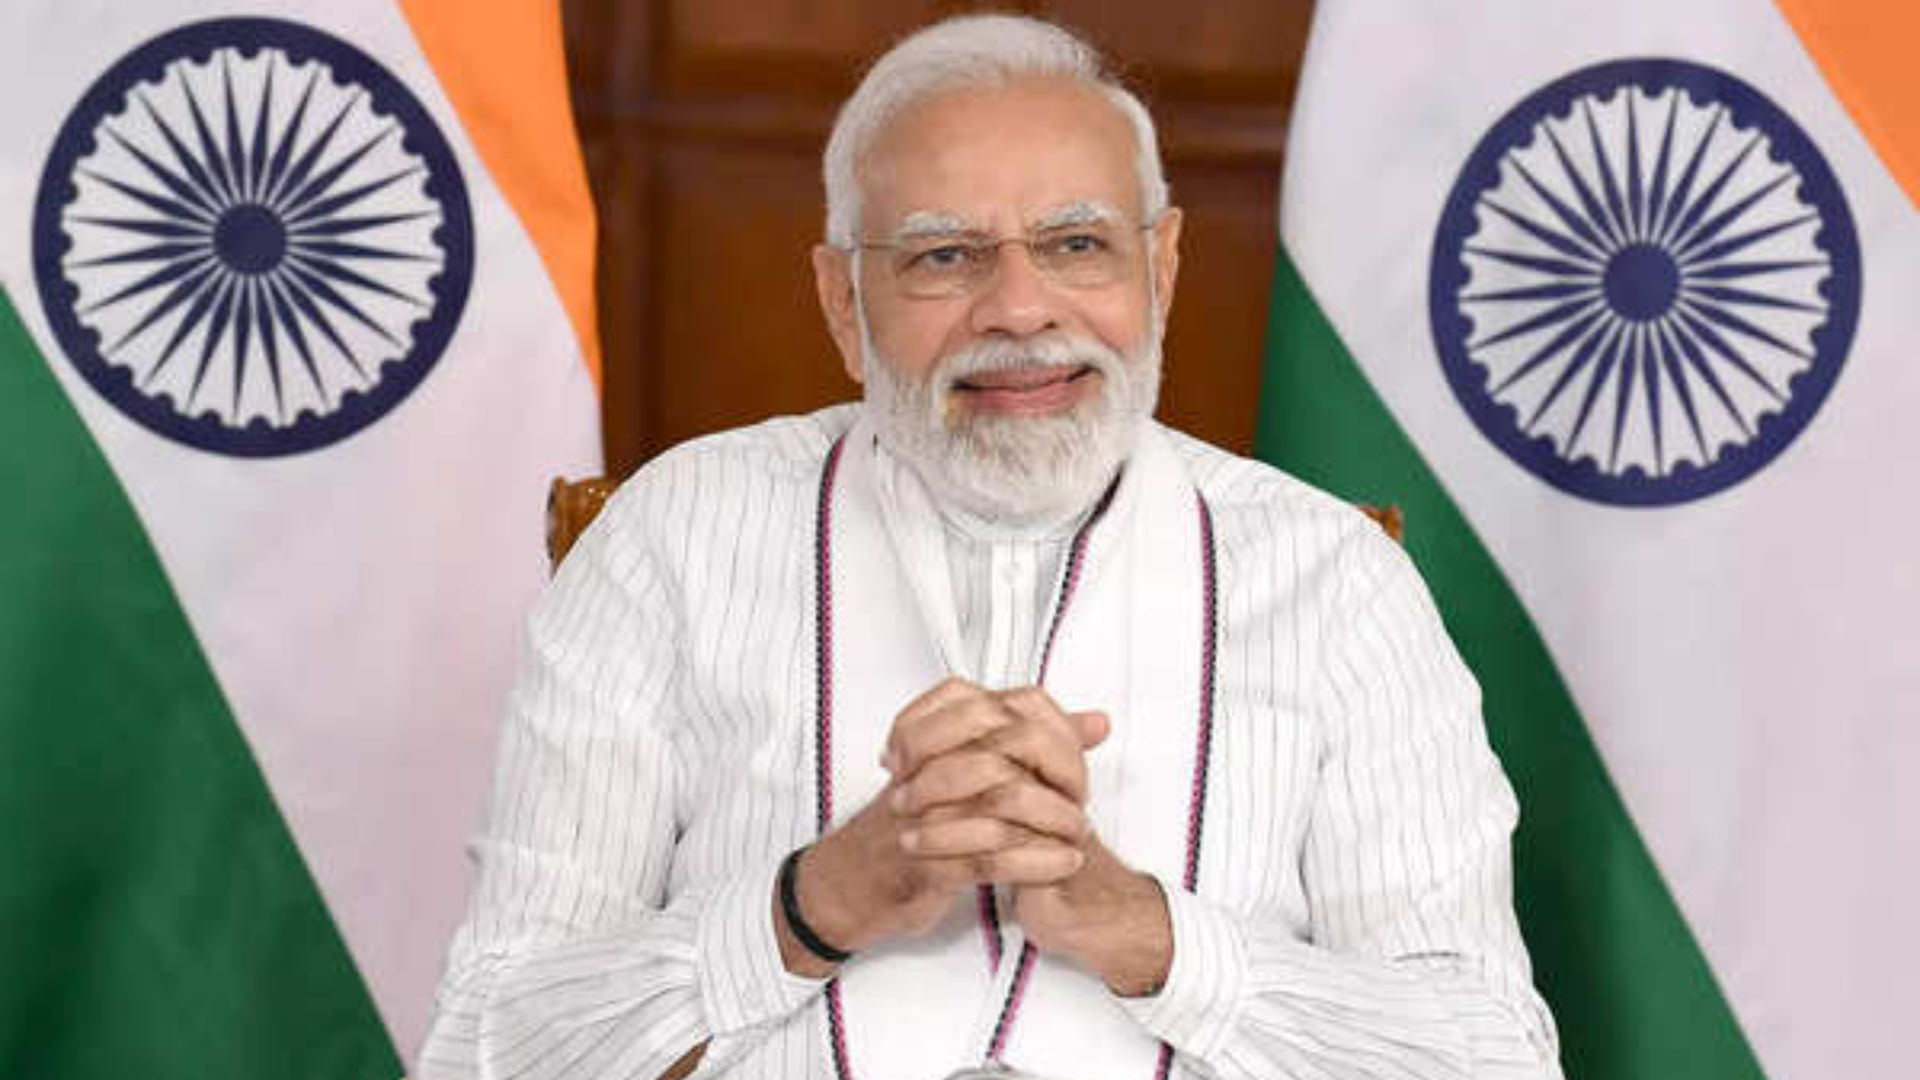 Prime Minister Modi Expresses Gratitude for Global Republic Day Wishes